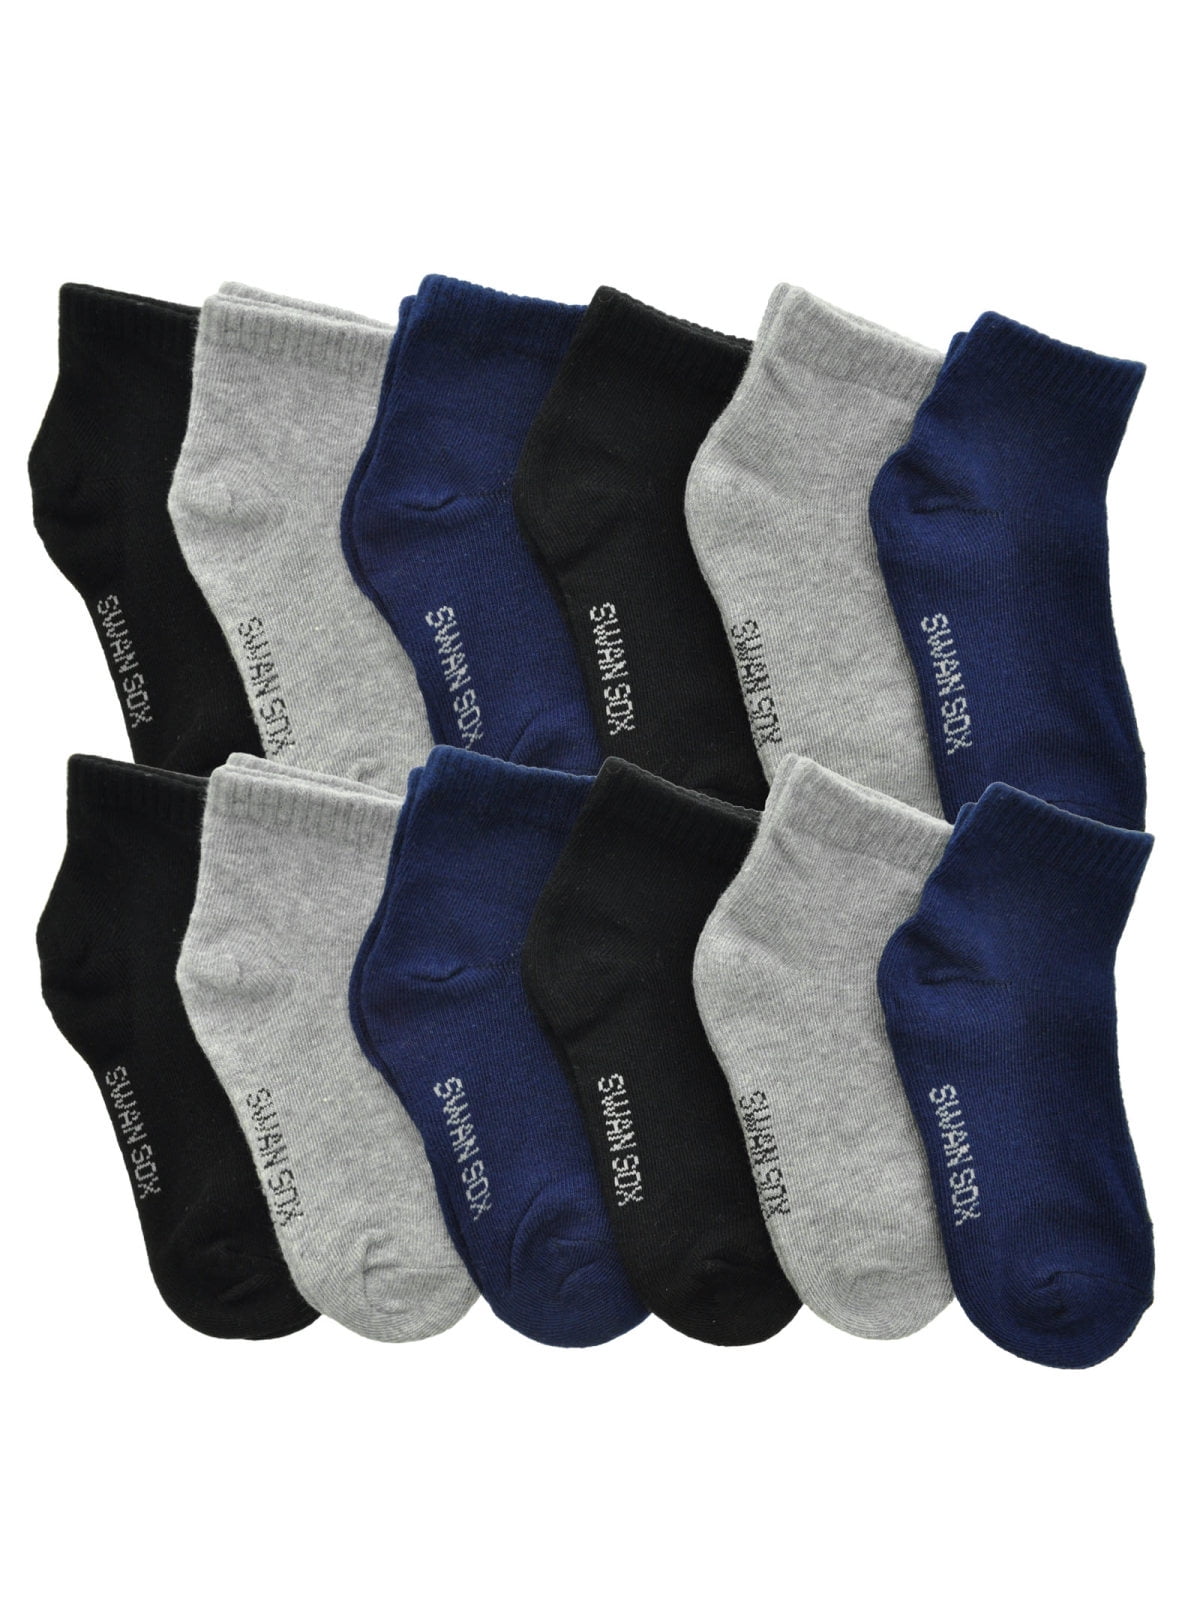 12 Pairs Of Designer Men Socks,Cotton Rich Poly Cotton Size 6-11 Heel&Toe Black 